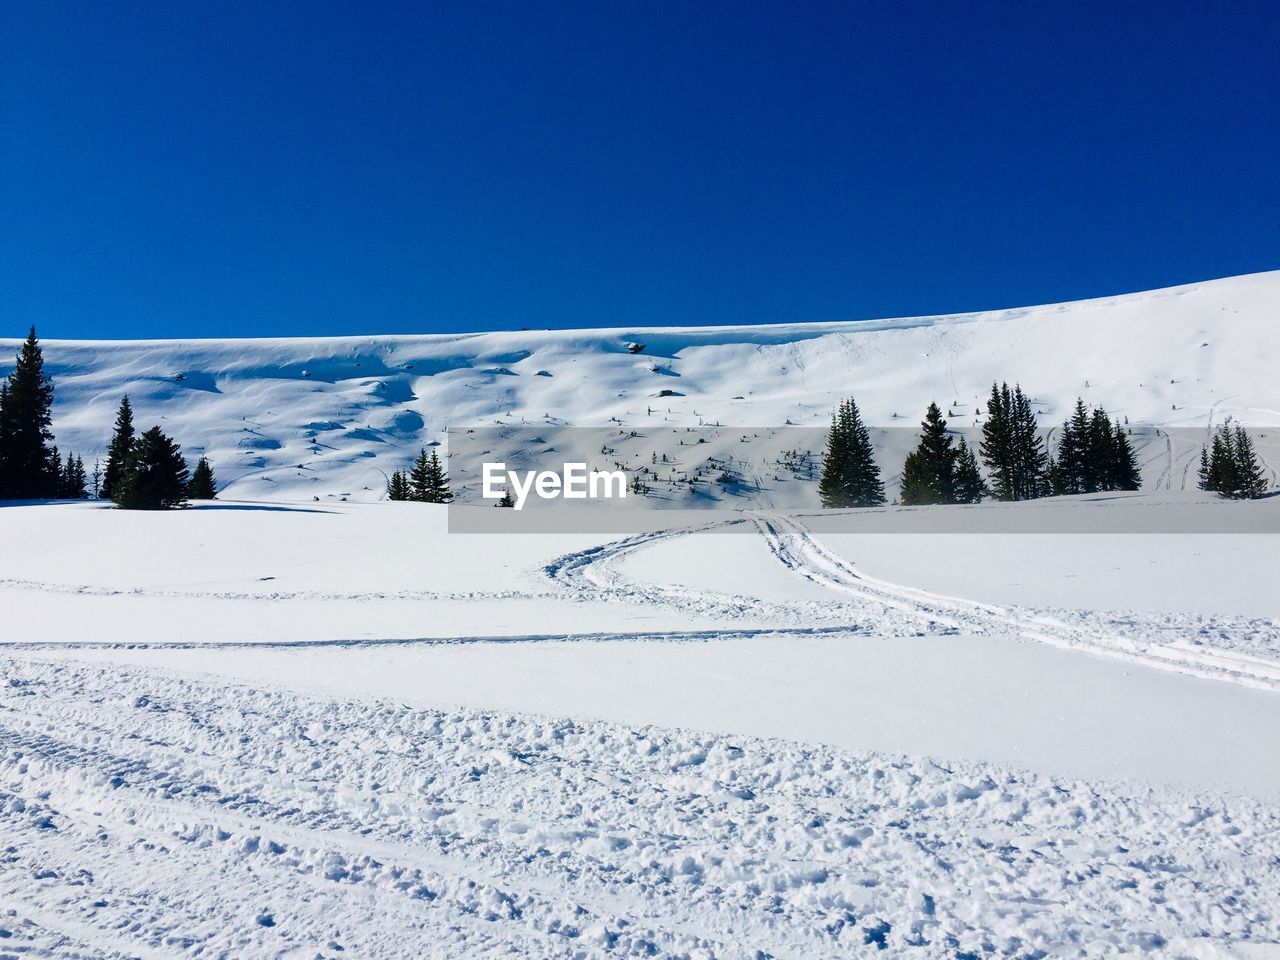 SNOW COVERED LANDSCAPE AGAINST BLUE SKY